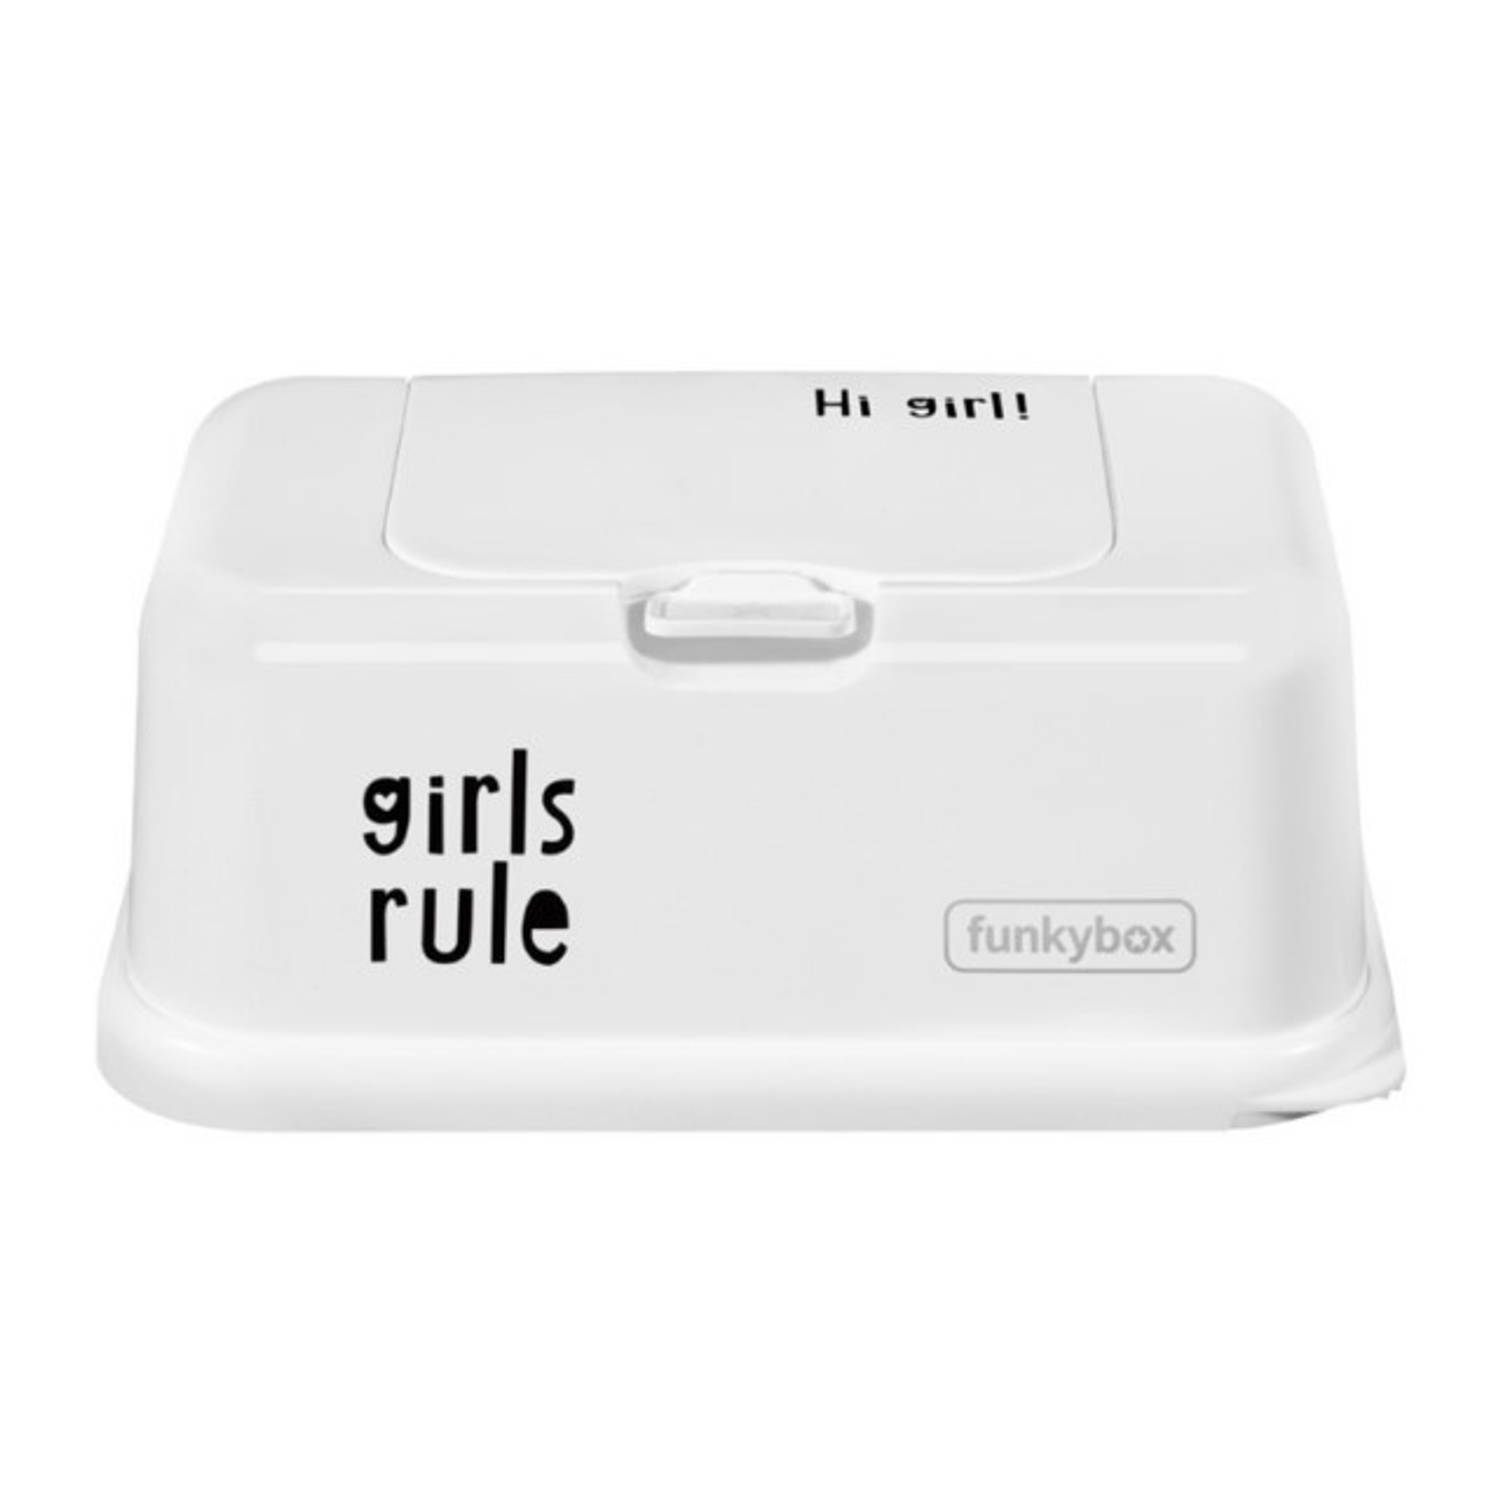 Funkybox wit Girls rule